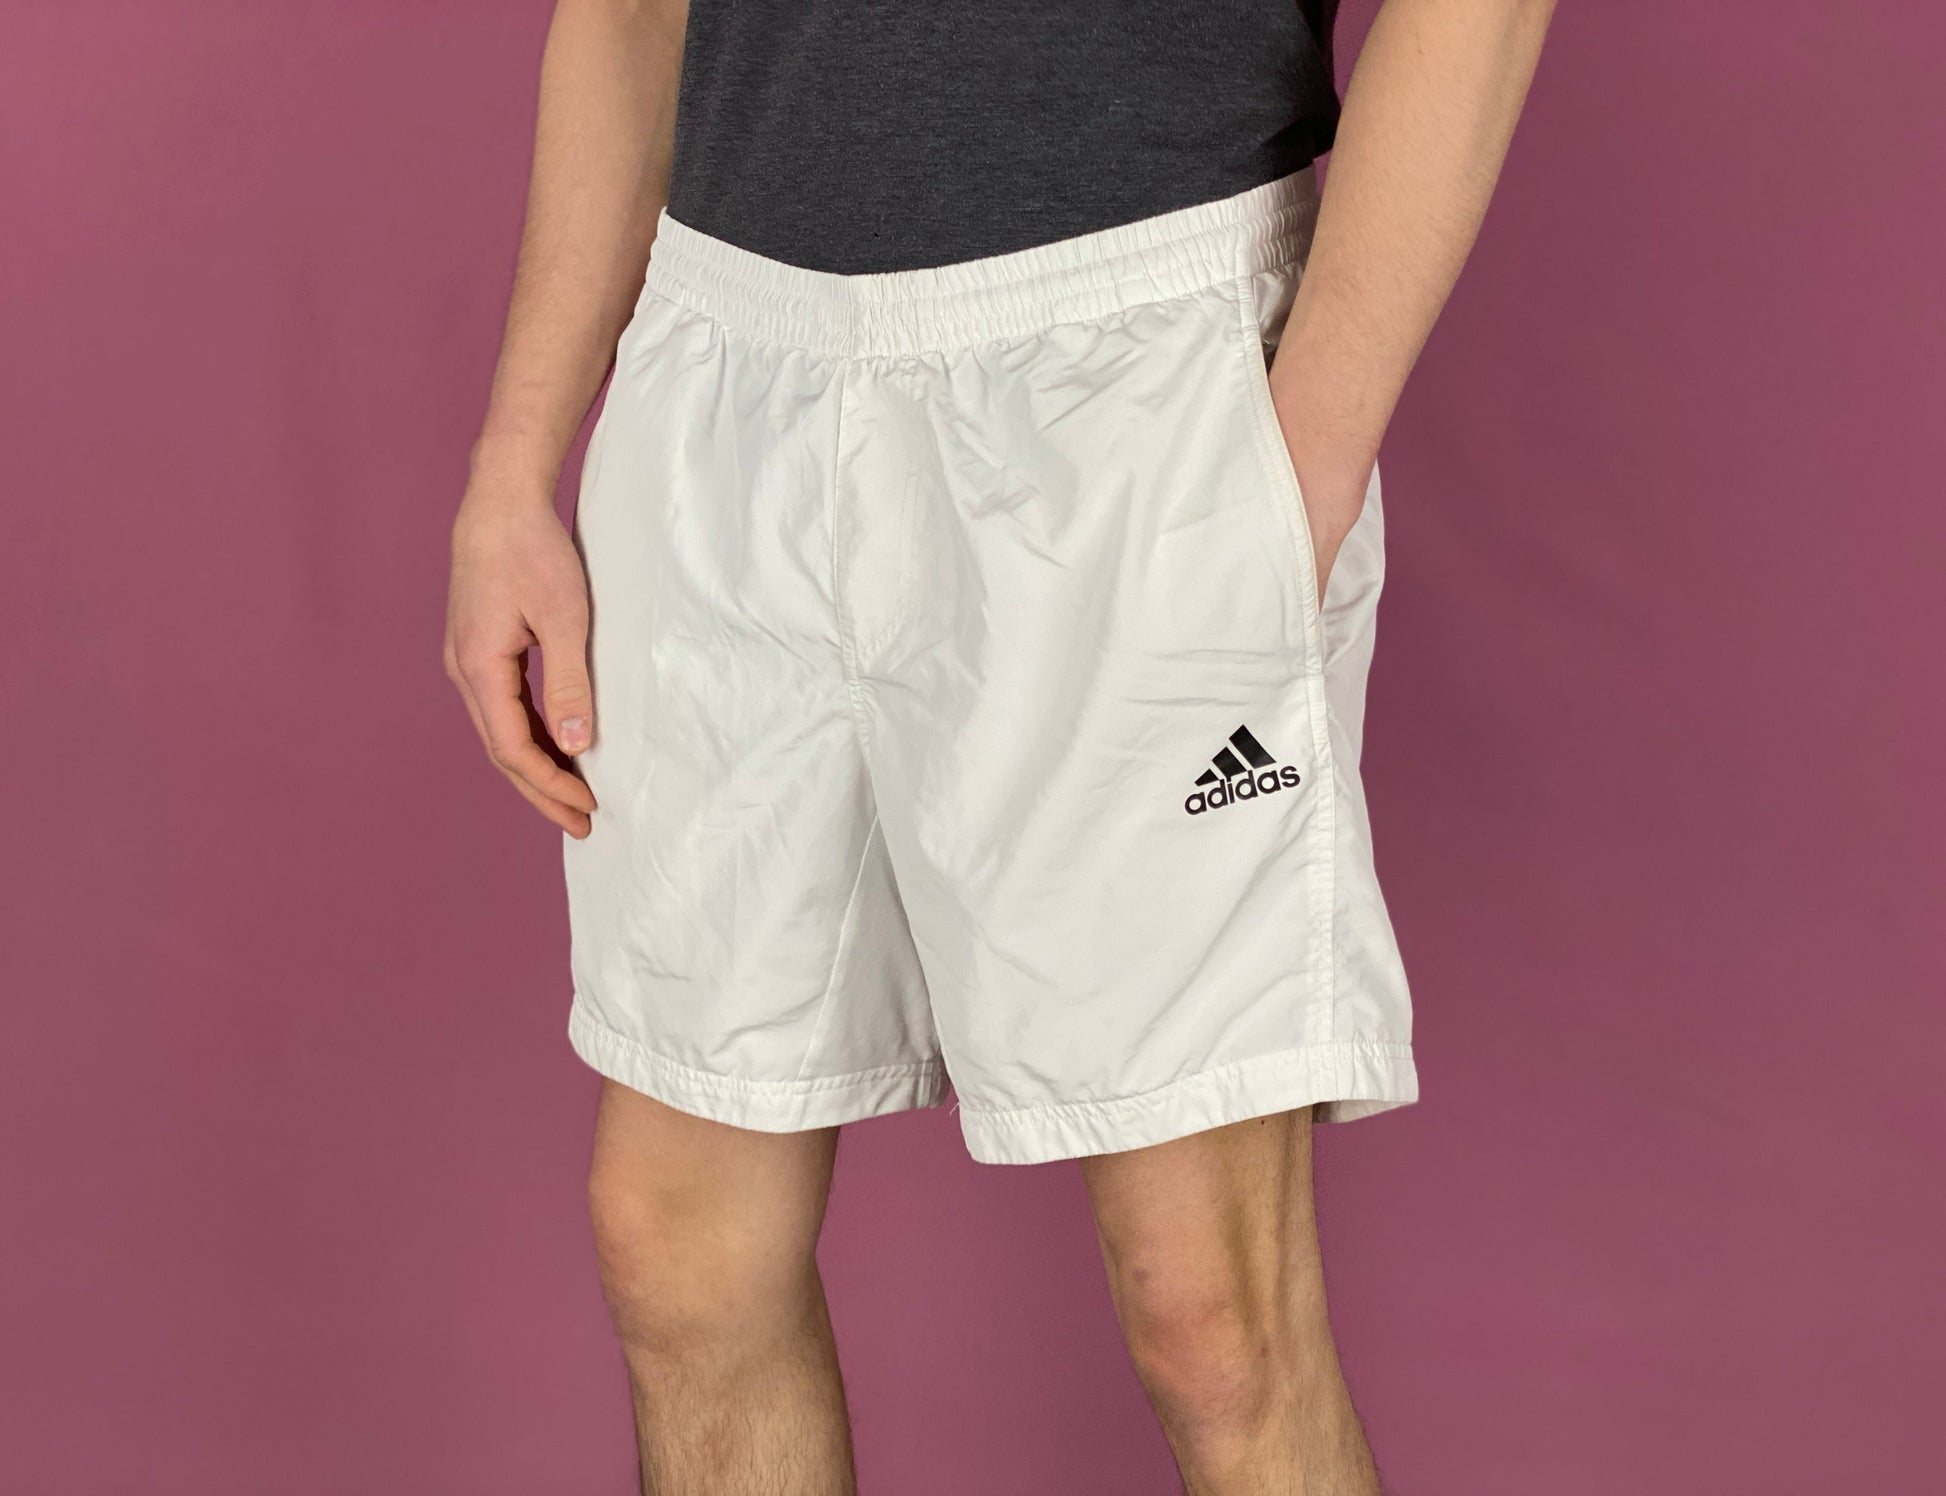 Adidas Vintage Men's Track Shorts - Large White Polyester